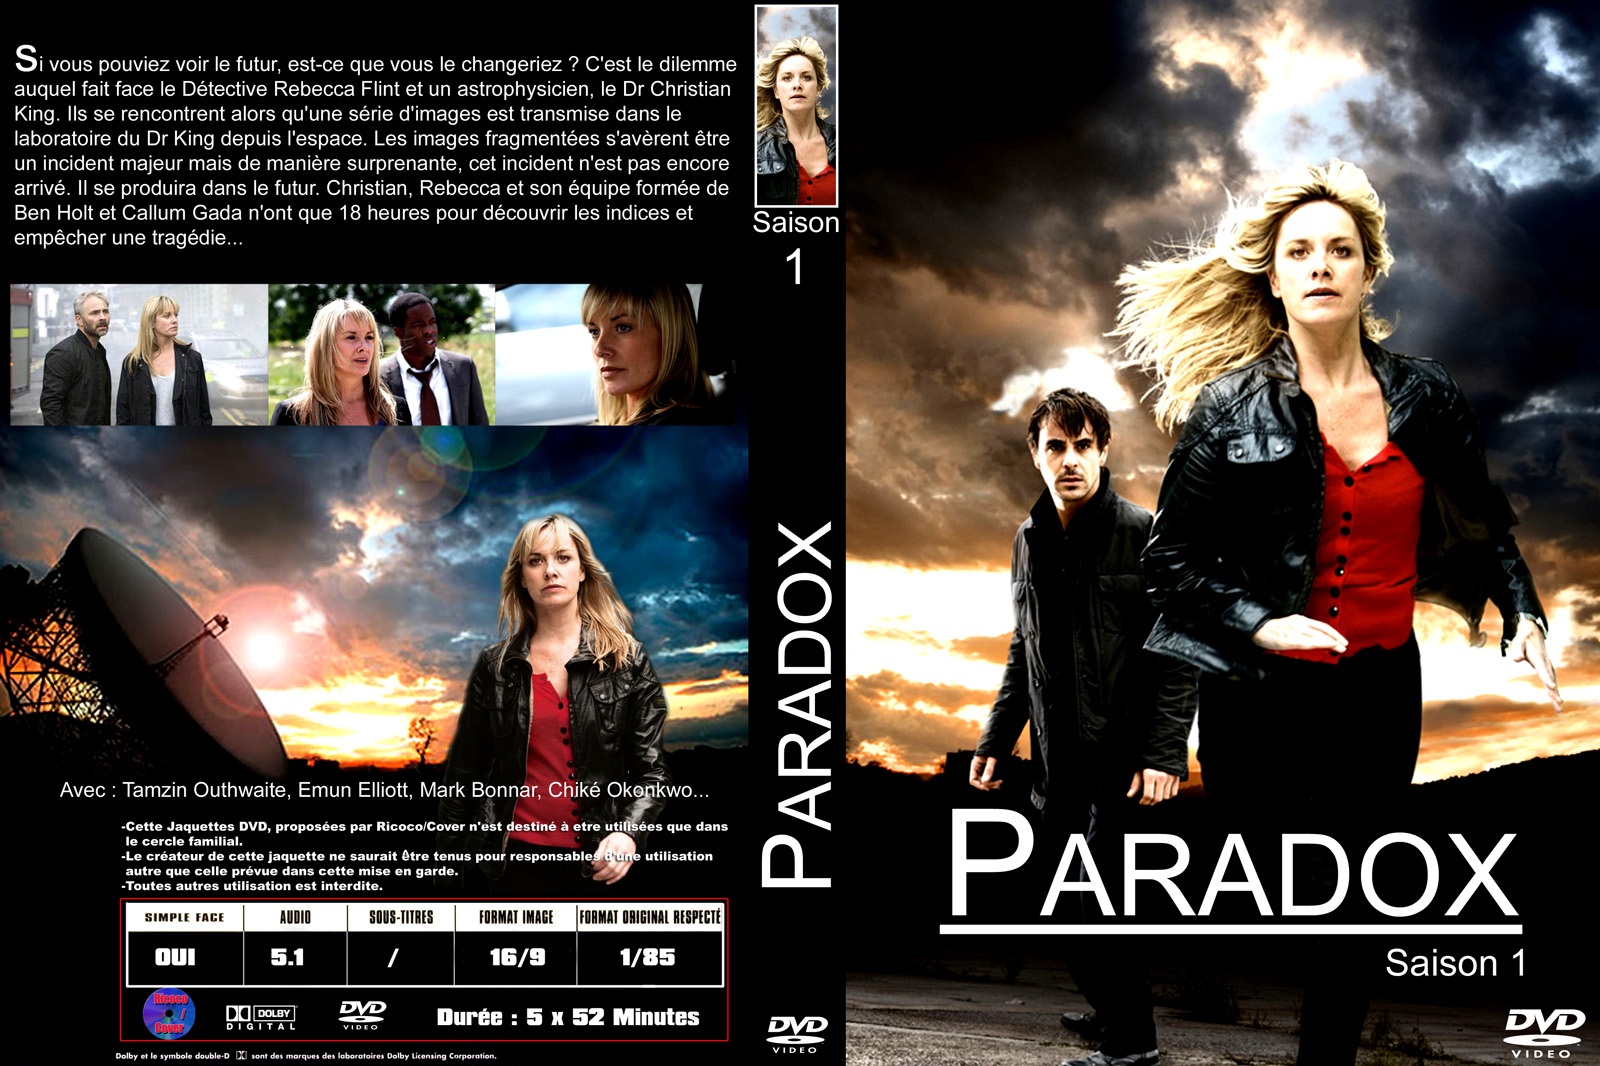 Jaquette DVD Paradox Saison 1 custom